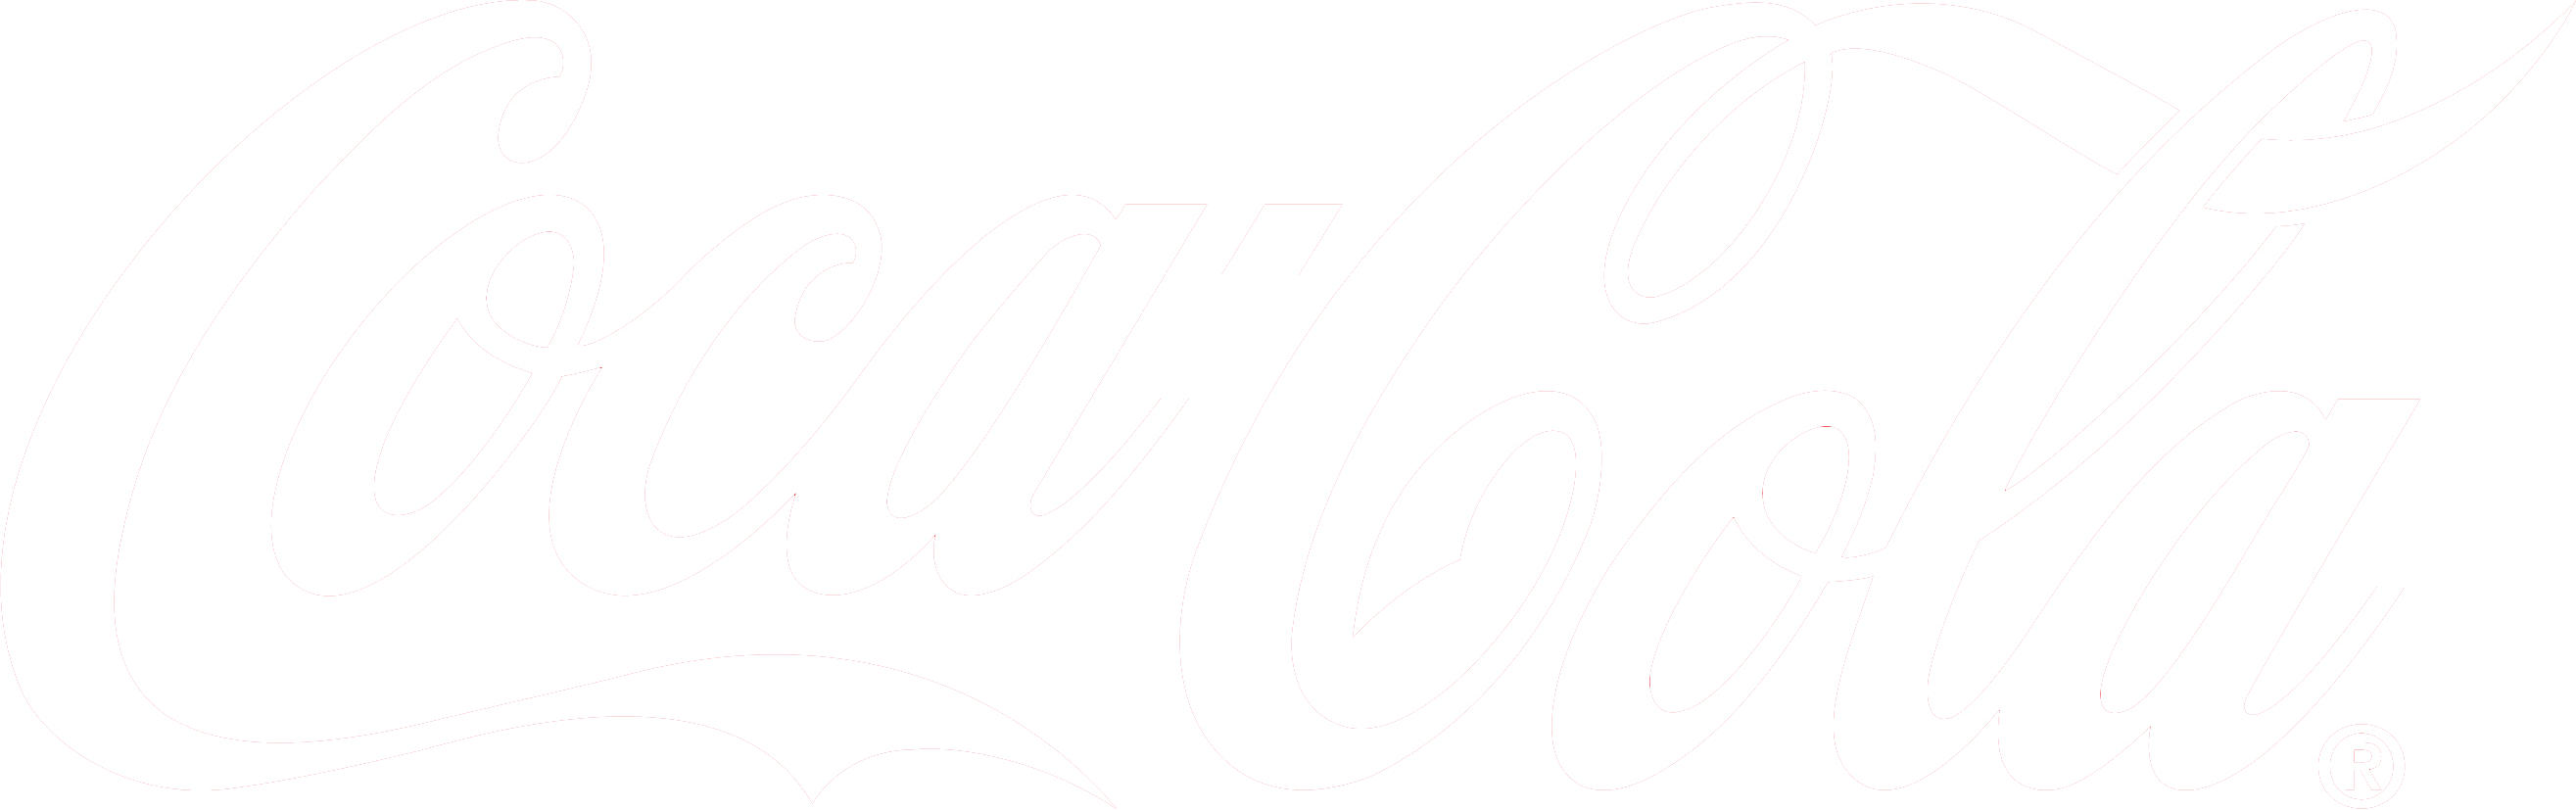 coca cola logo png image #4634